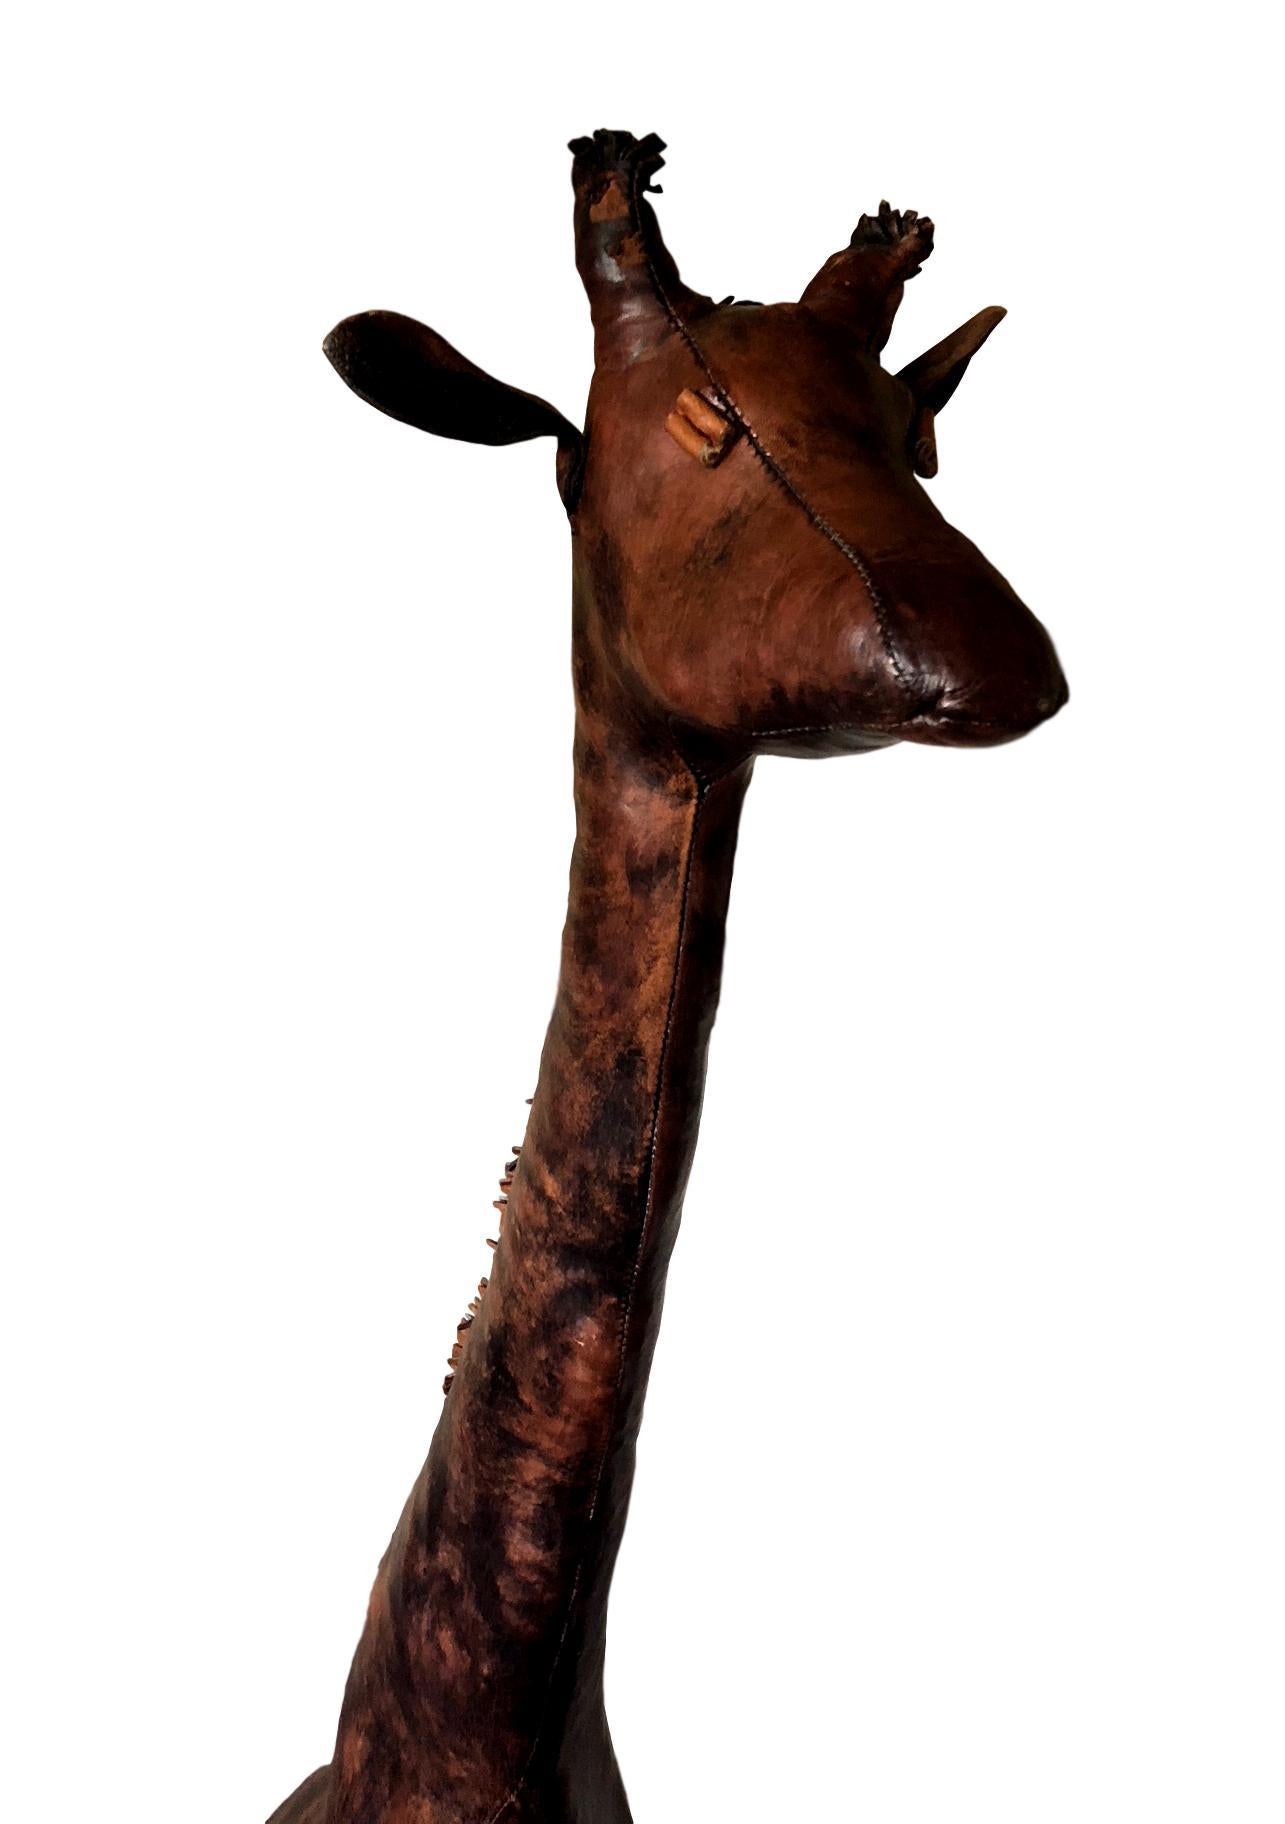 6 ft tall giraffe stuffed animal